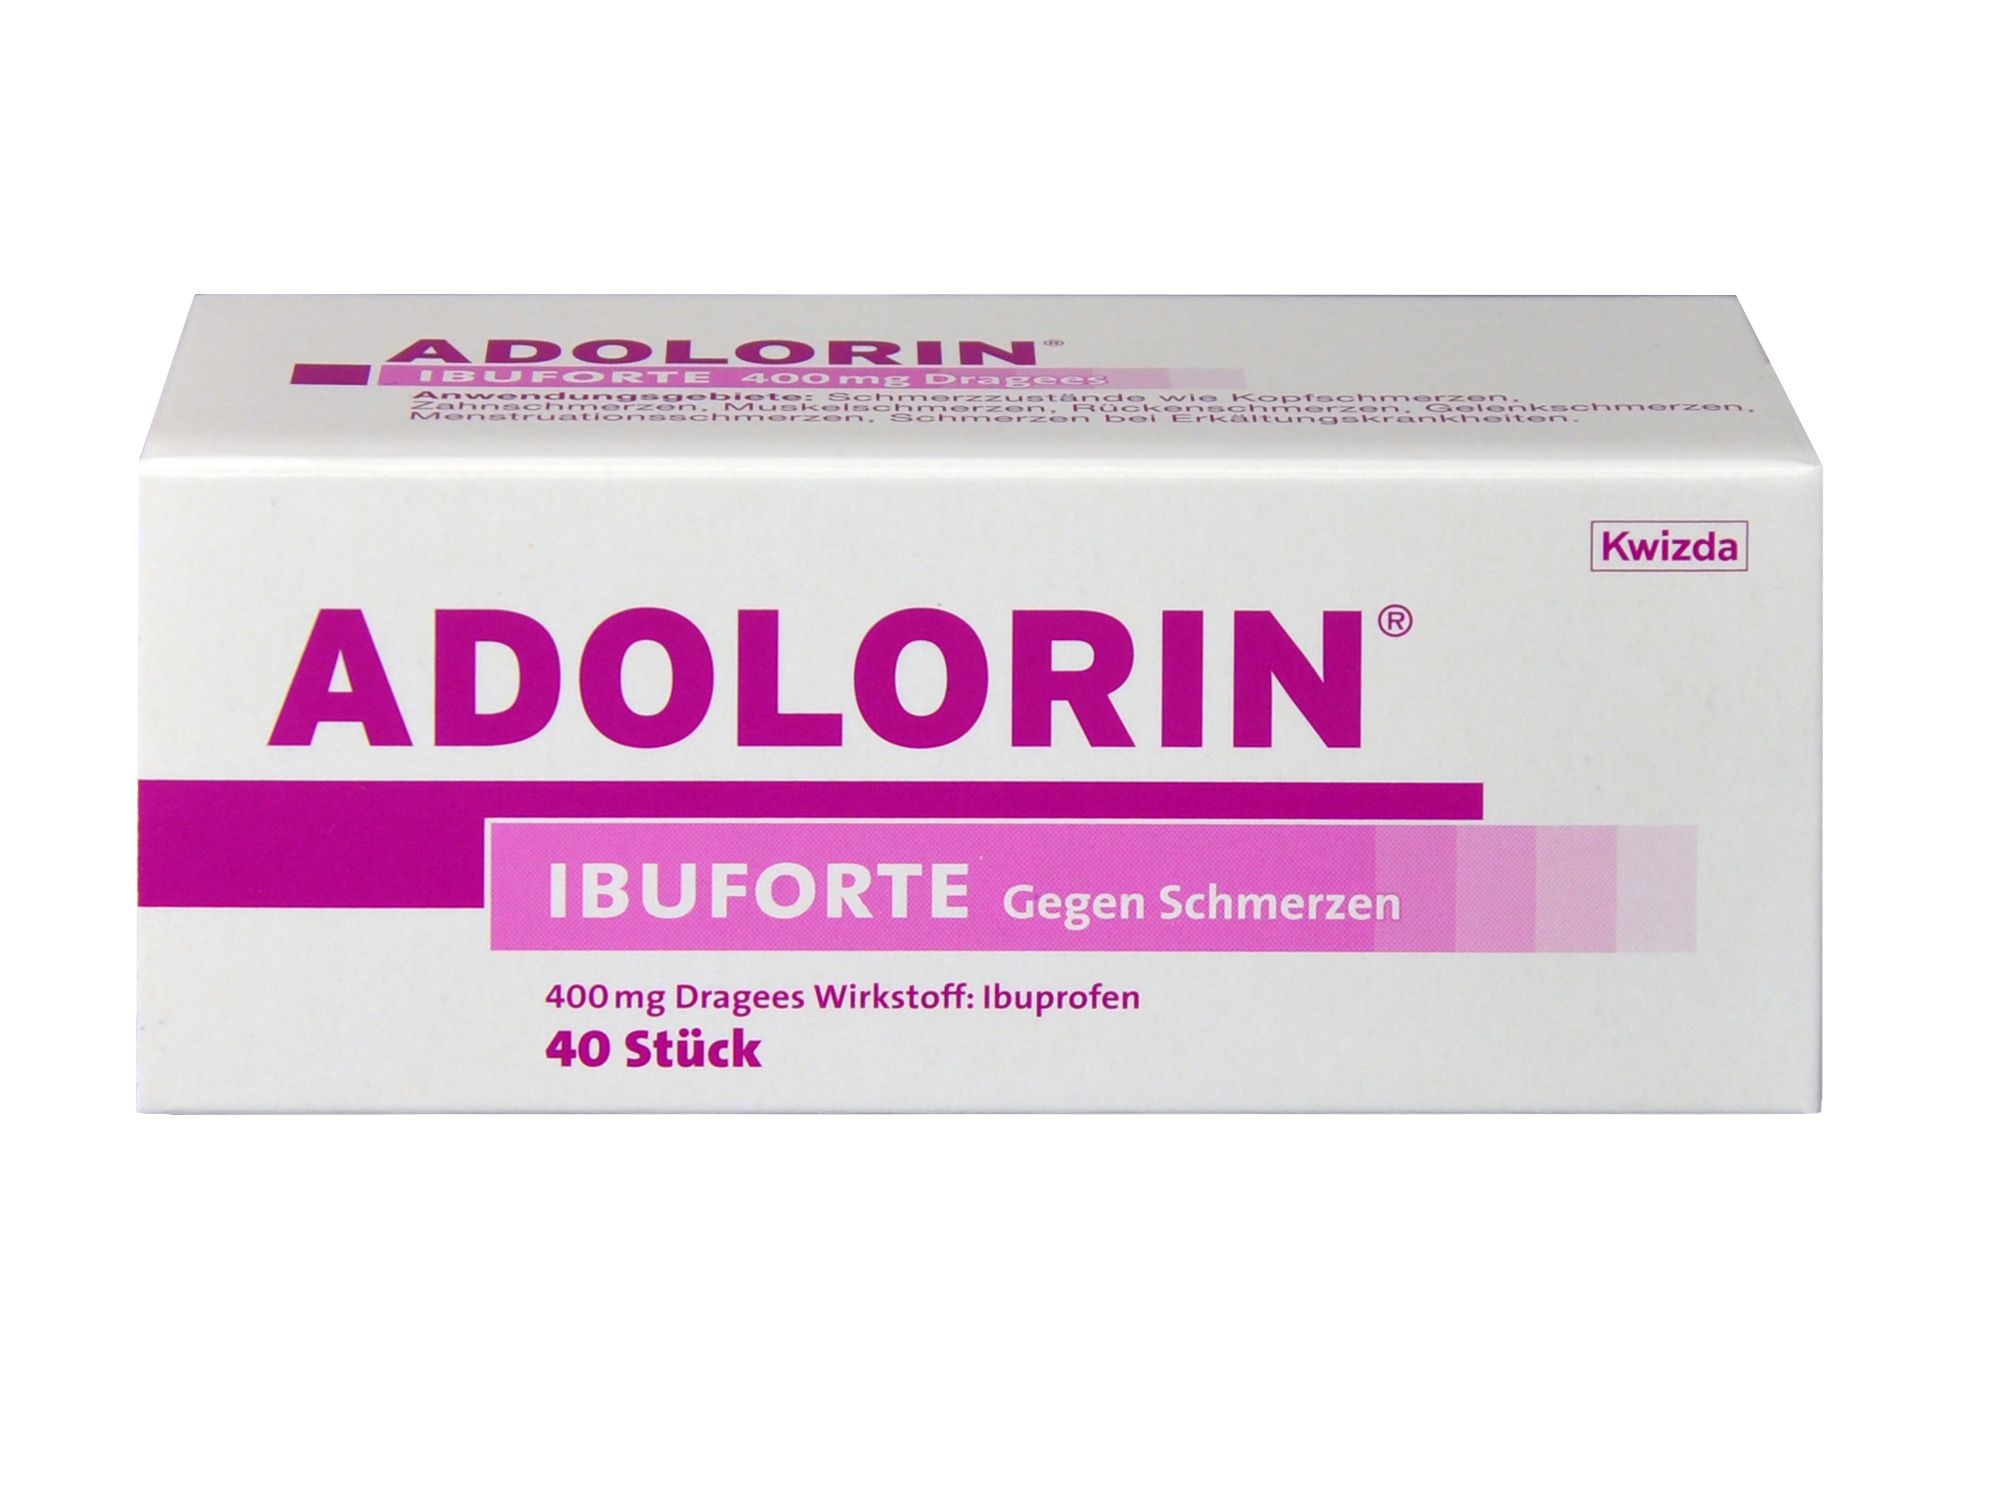 Abbildung Adolorin Ibuforte 400 mg Dragees